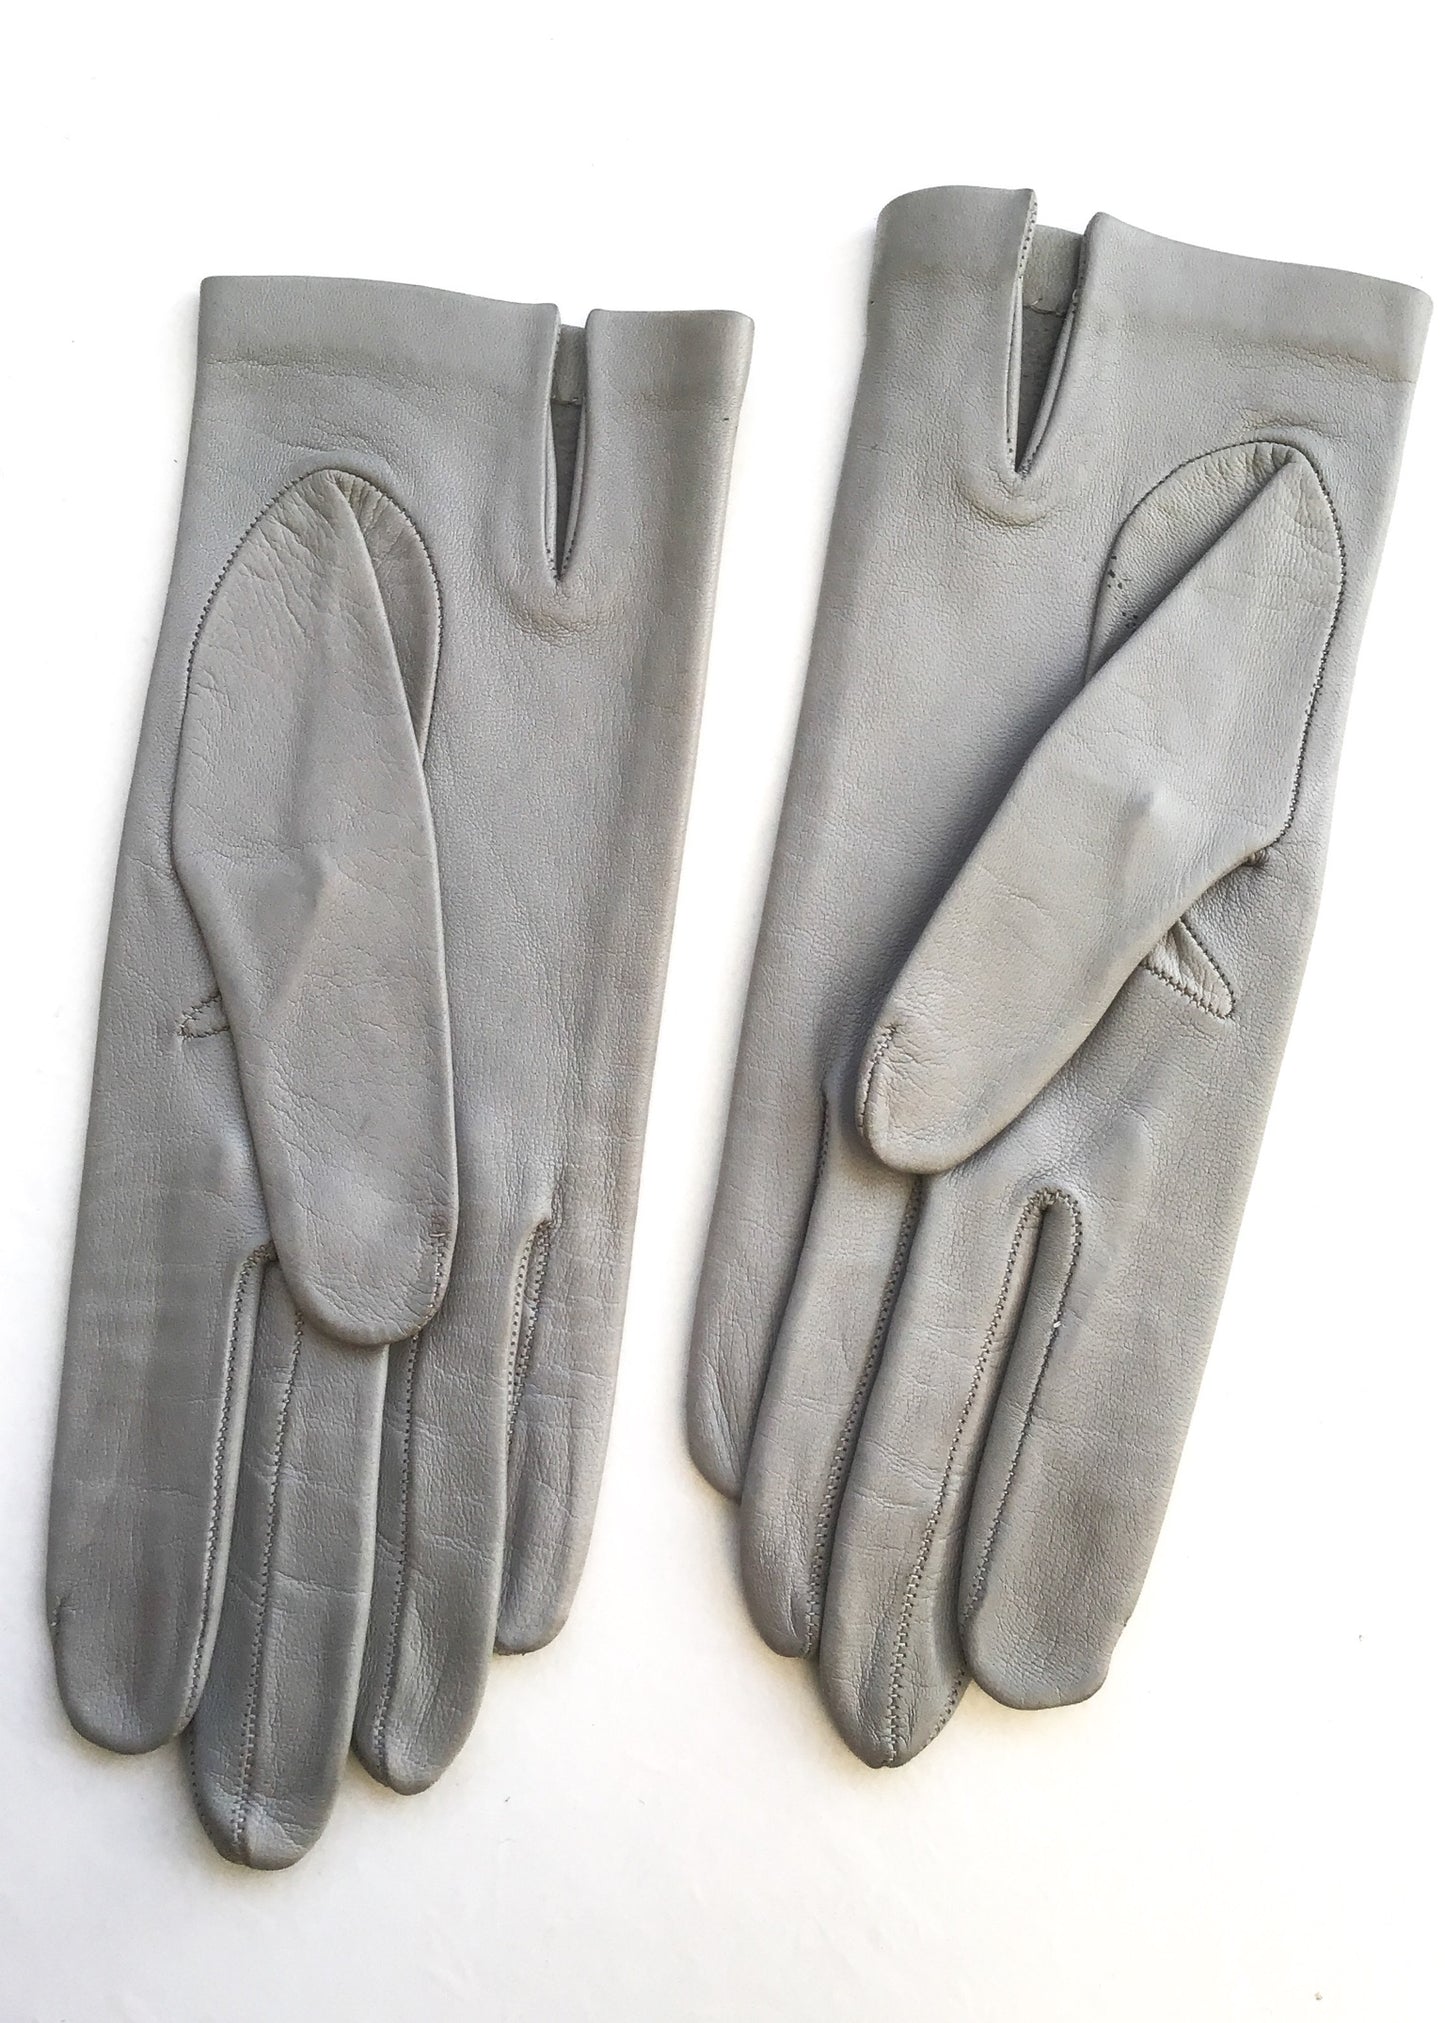 1960s Vintage Dove Grey Leather Gloves • Wrist Length Gloves • Size 7